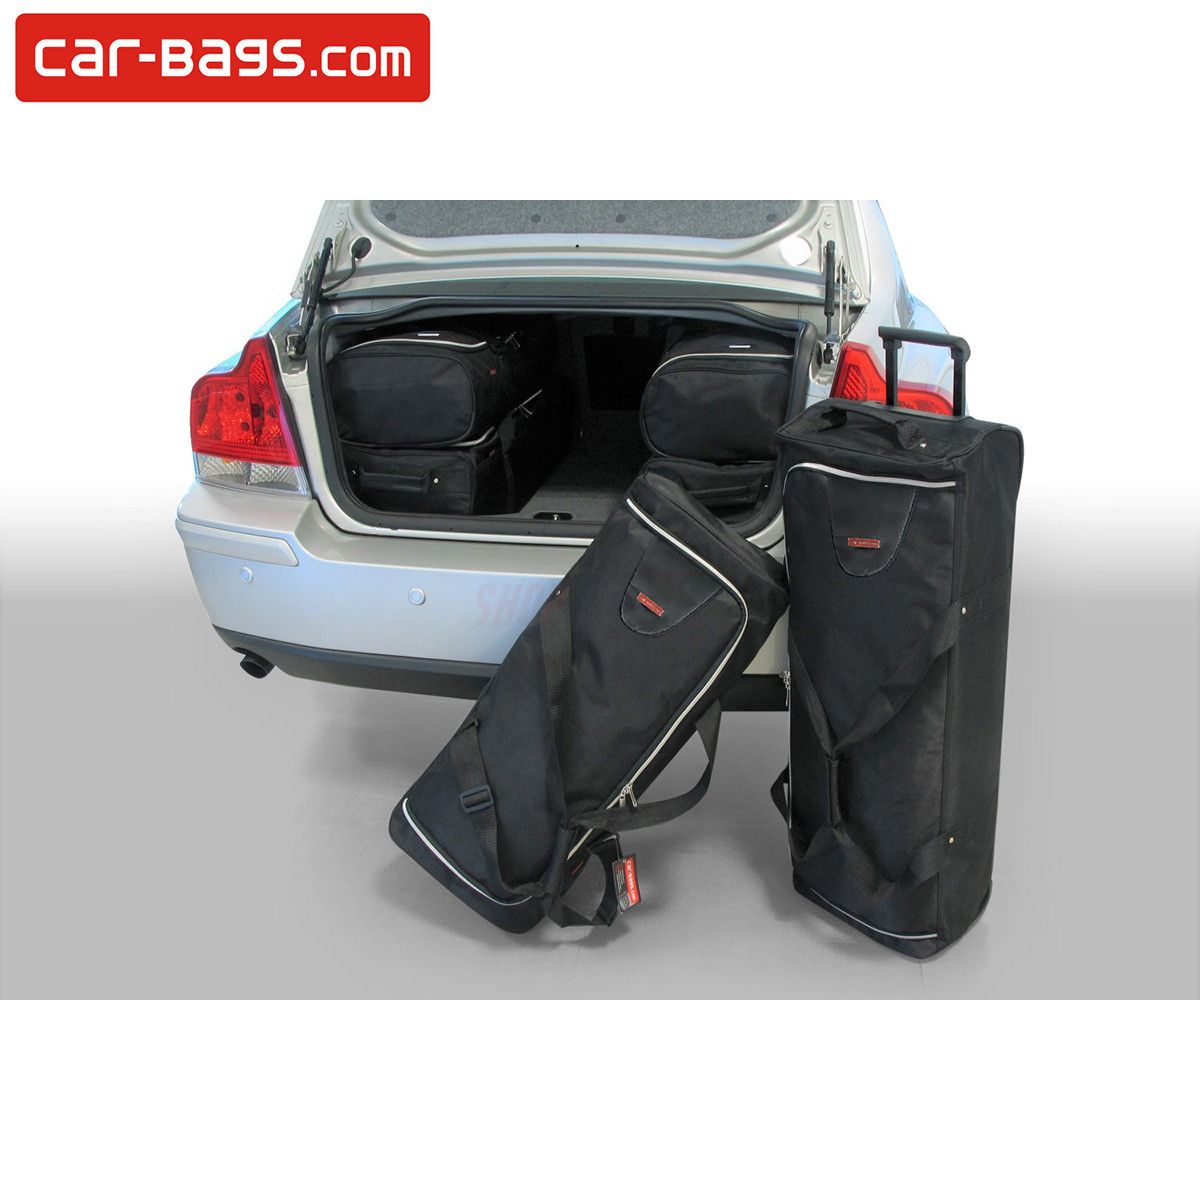 Cache-bagages - C30 2007 - Accessoires Volvo Cars